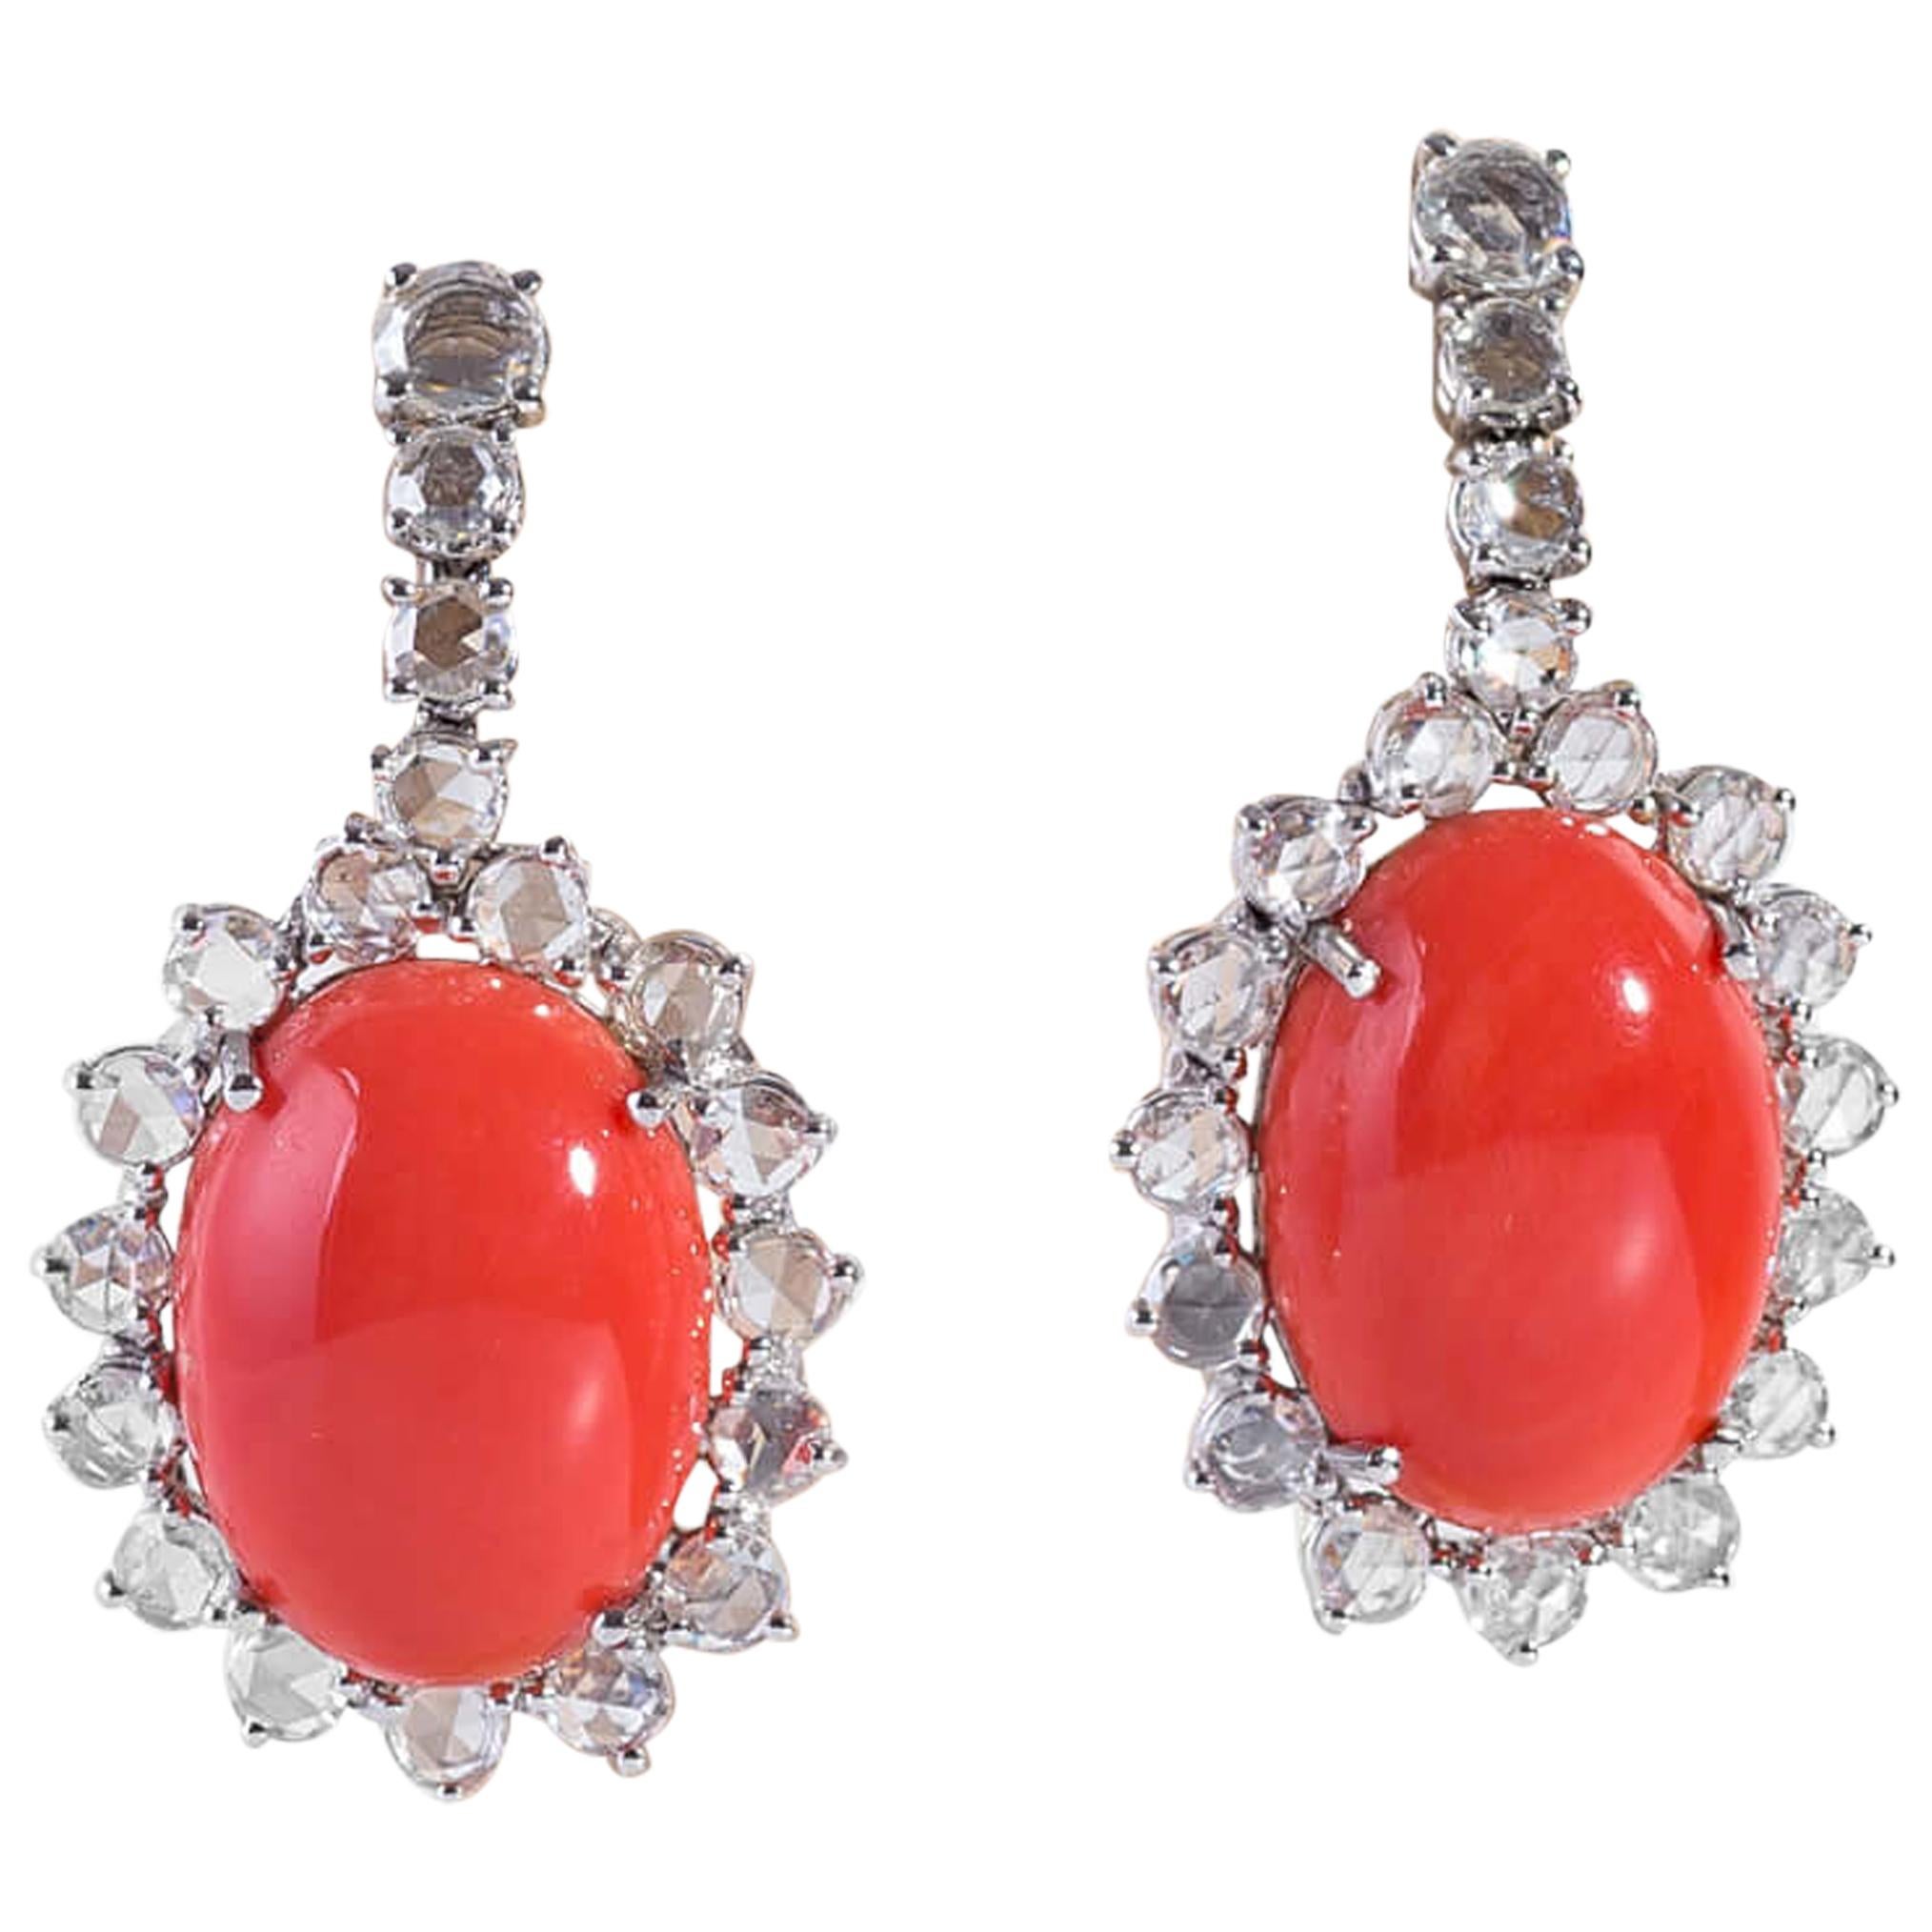 coral pendant earrings set with cut diamonds G colour 3,02 ,coral 14,20 gr